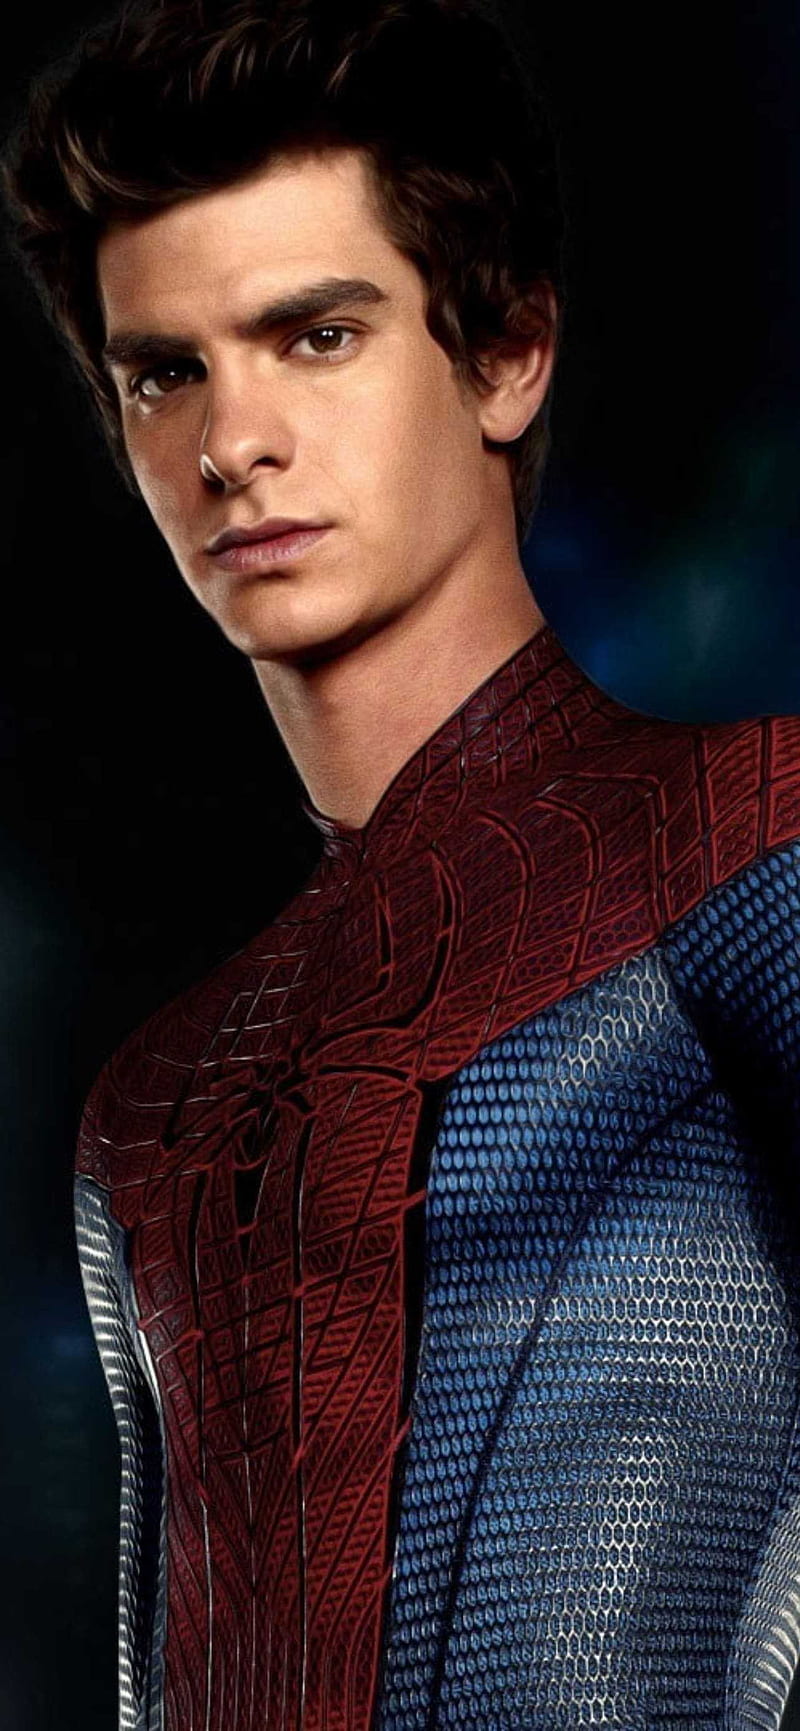 1920x1080px, 1080P free download | Andrew Garfield Spider Man ...